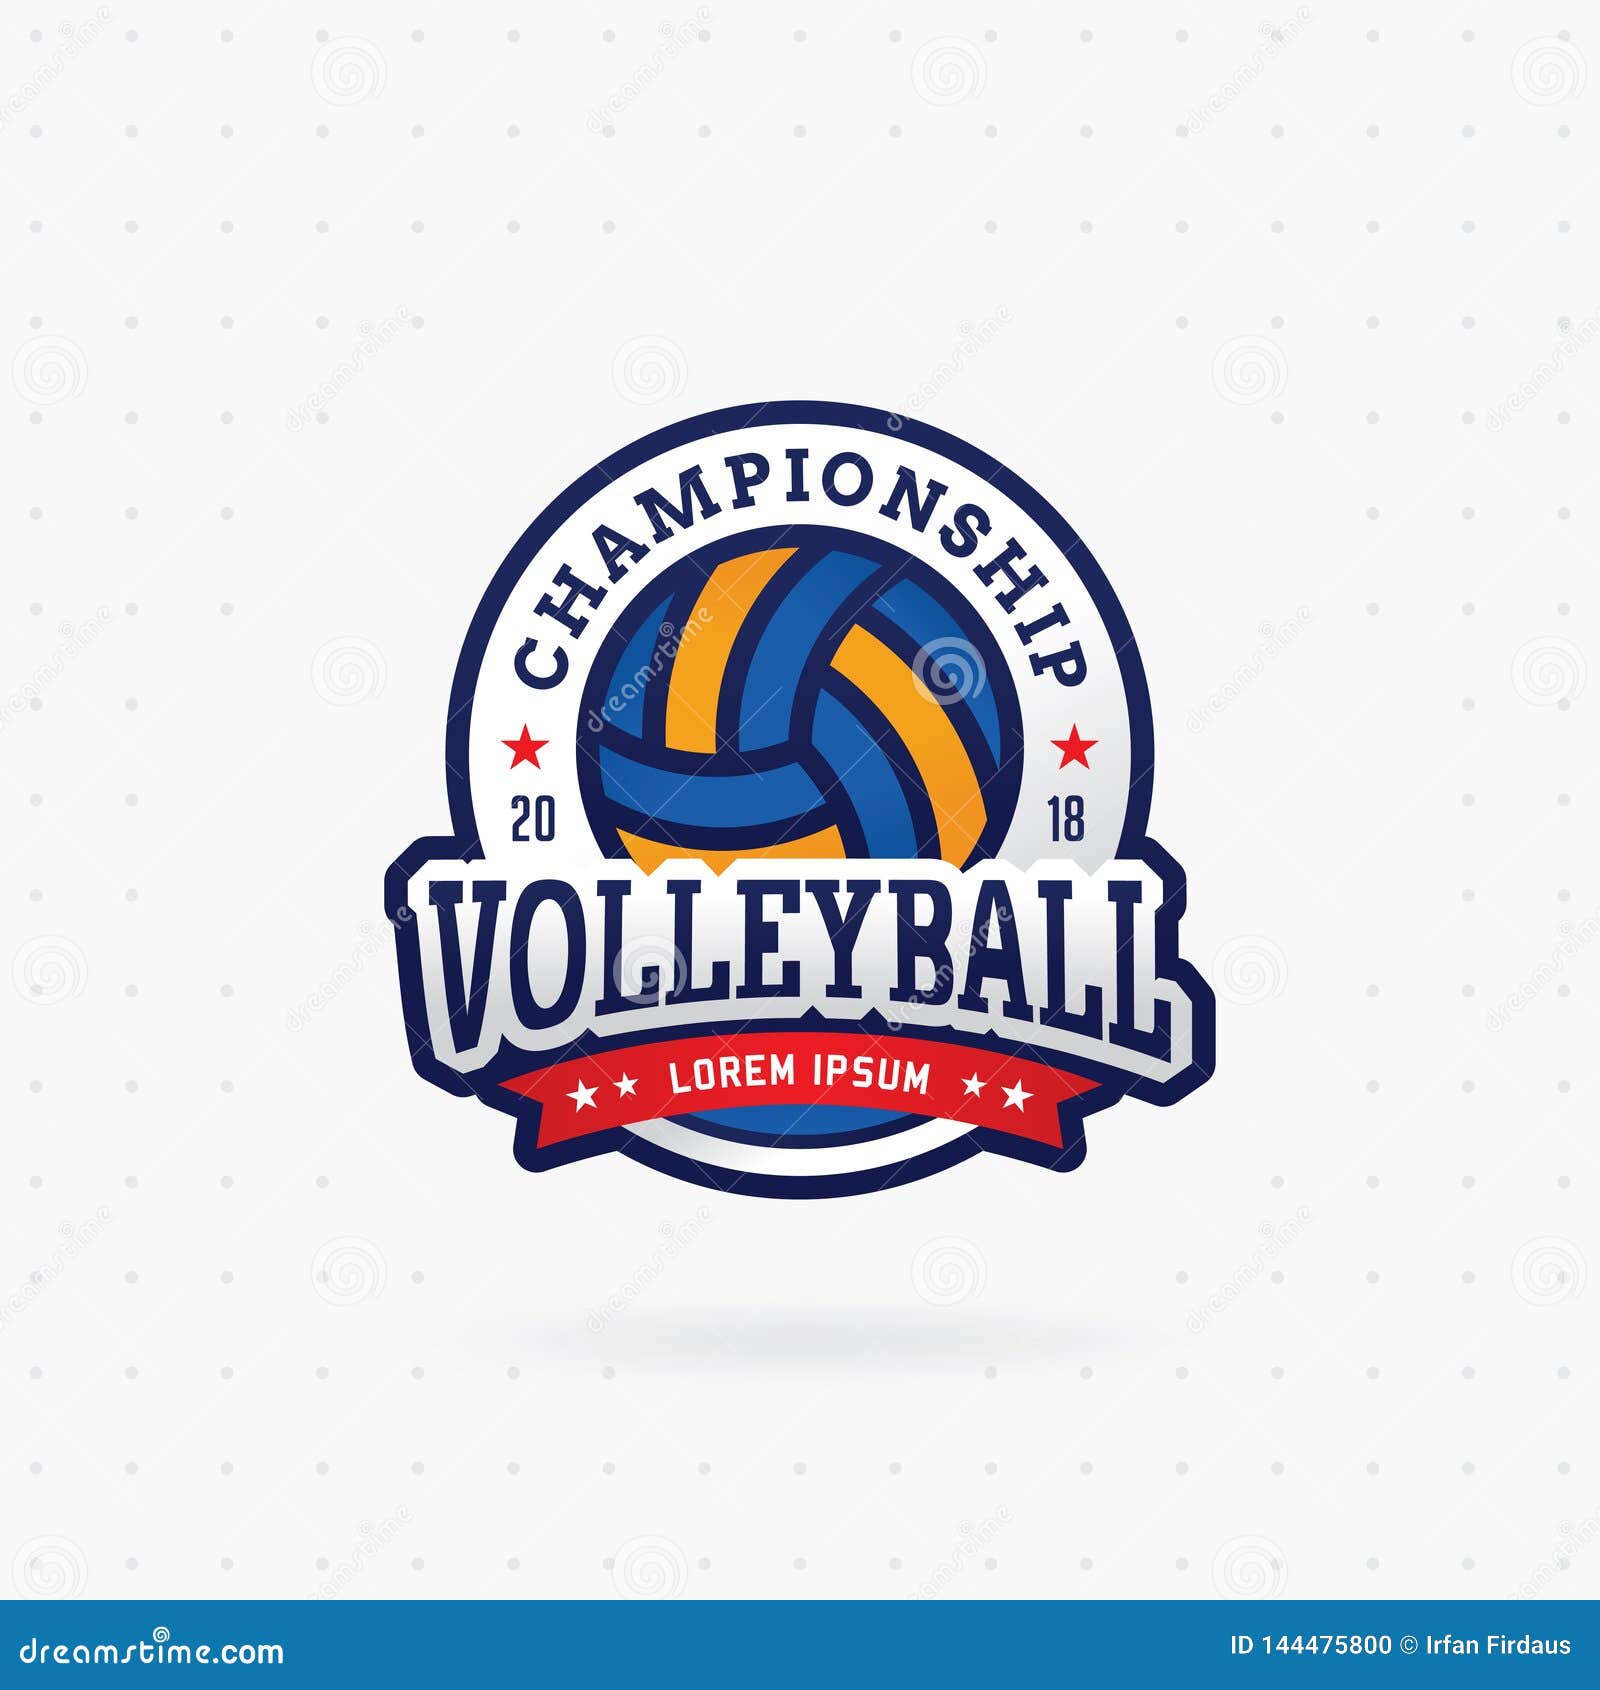 Volleyball tournament logo stock vector. Illustration of logo - 144475800